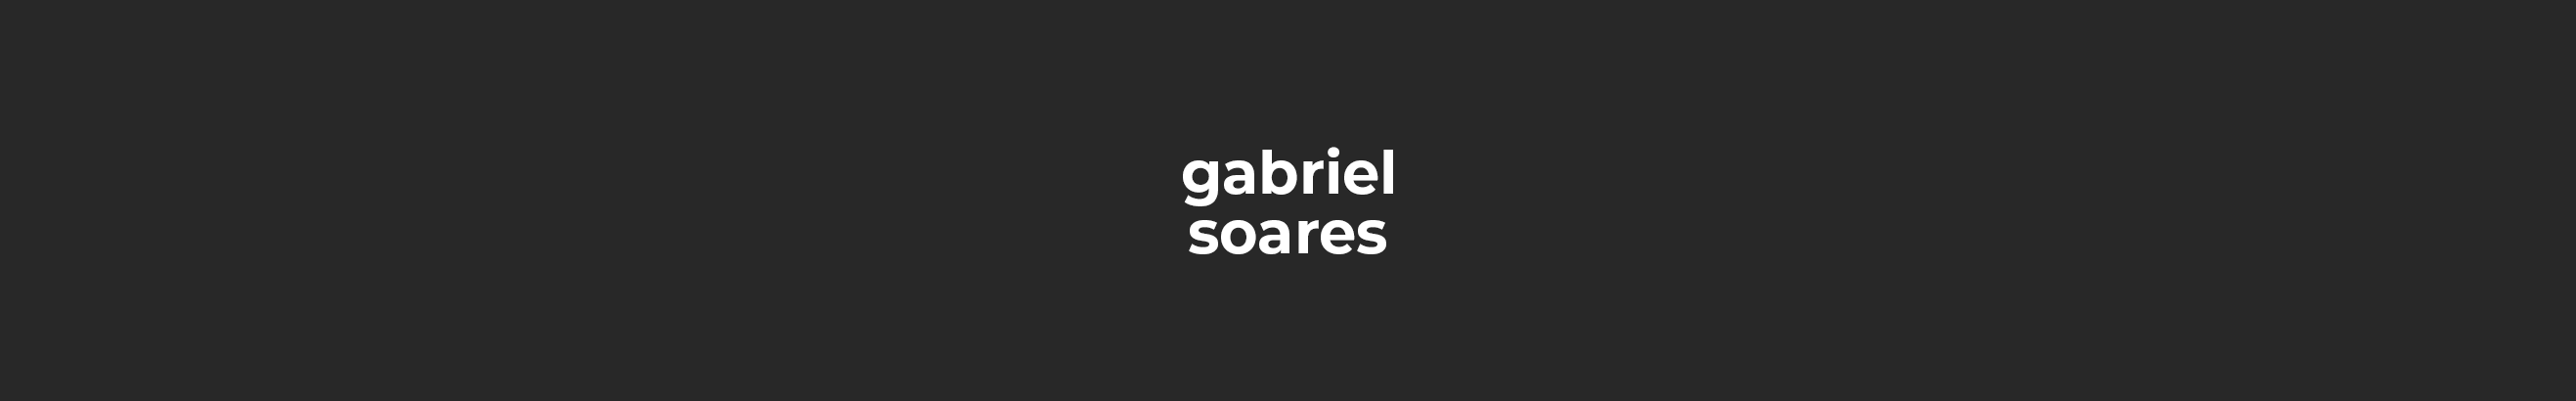 Gabriel Soaress profilbanner